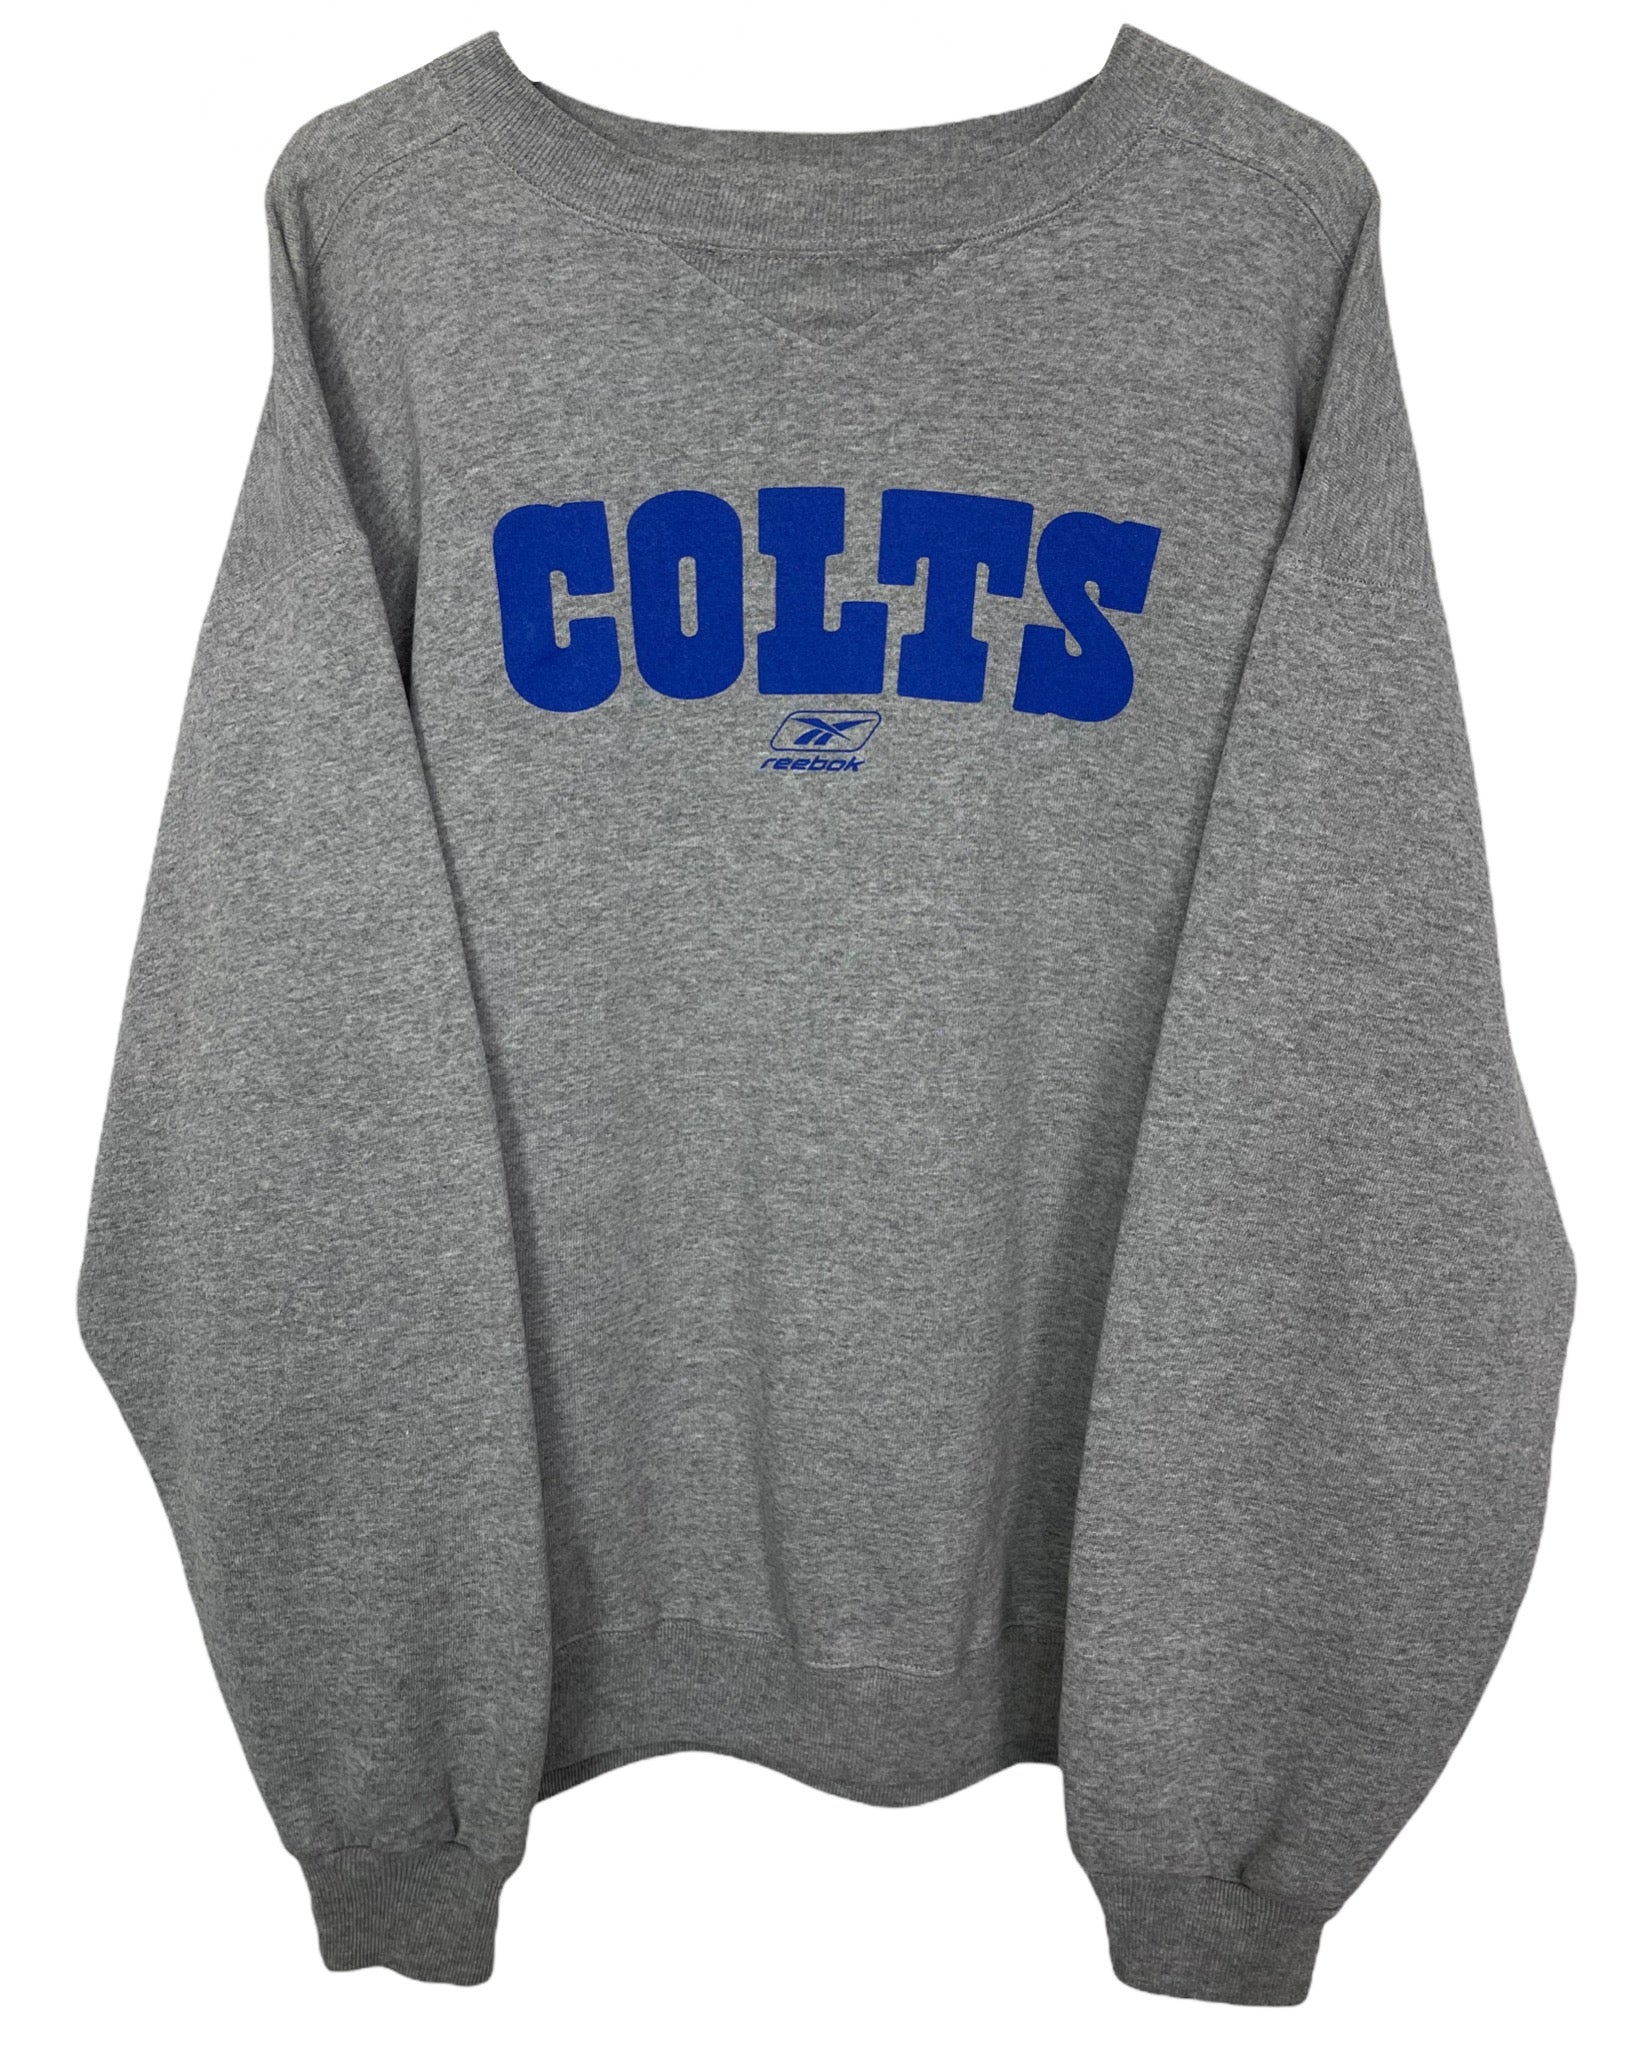  Sweatshirt Reebok Sweat - Indianapolis Colts - XL - PLOMOSTORE